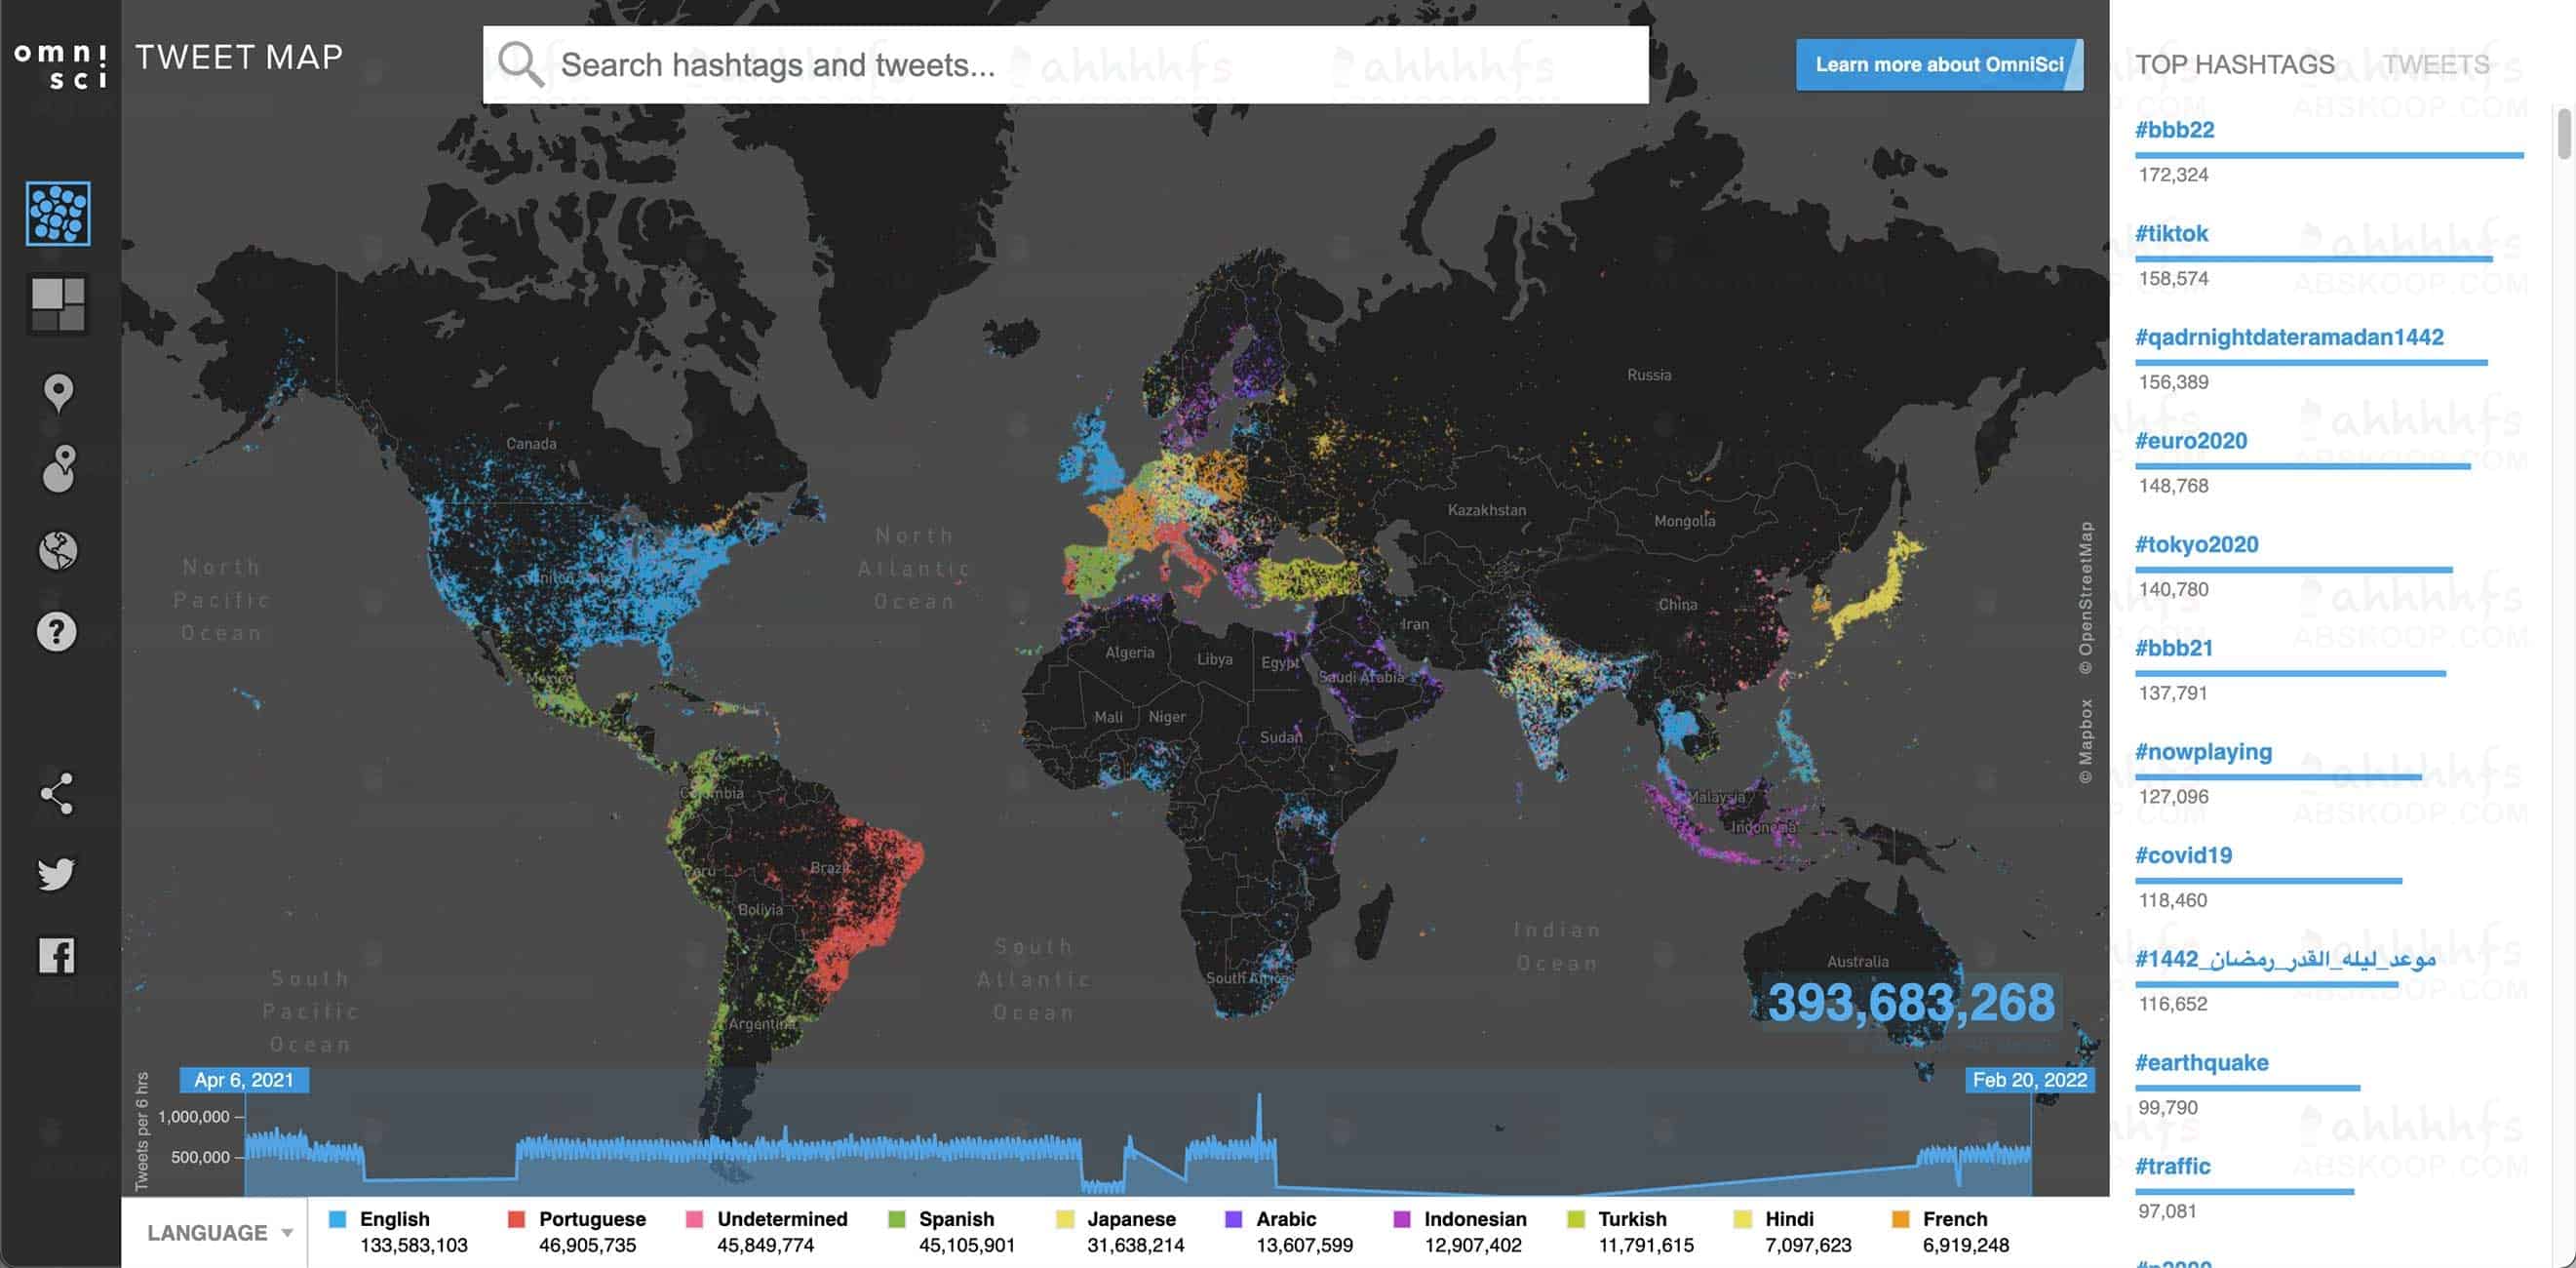 OmniSci Tweetmap 全球推文趋势和热词可视化 看看中文圈用户都在干啥